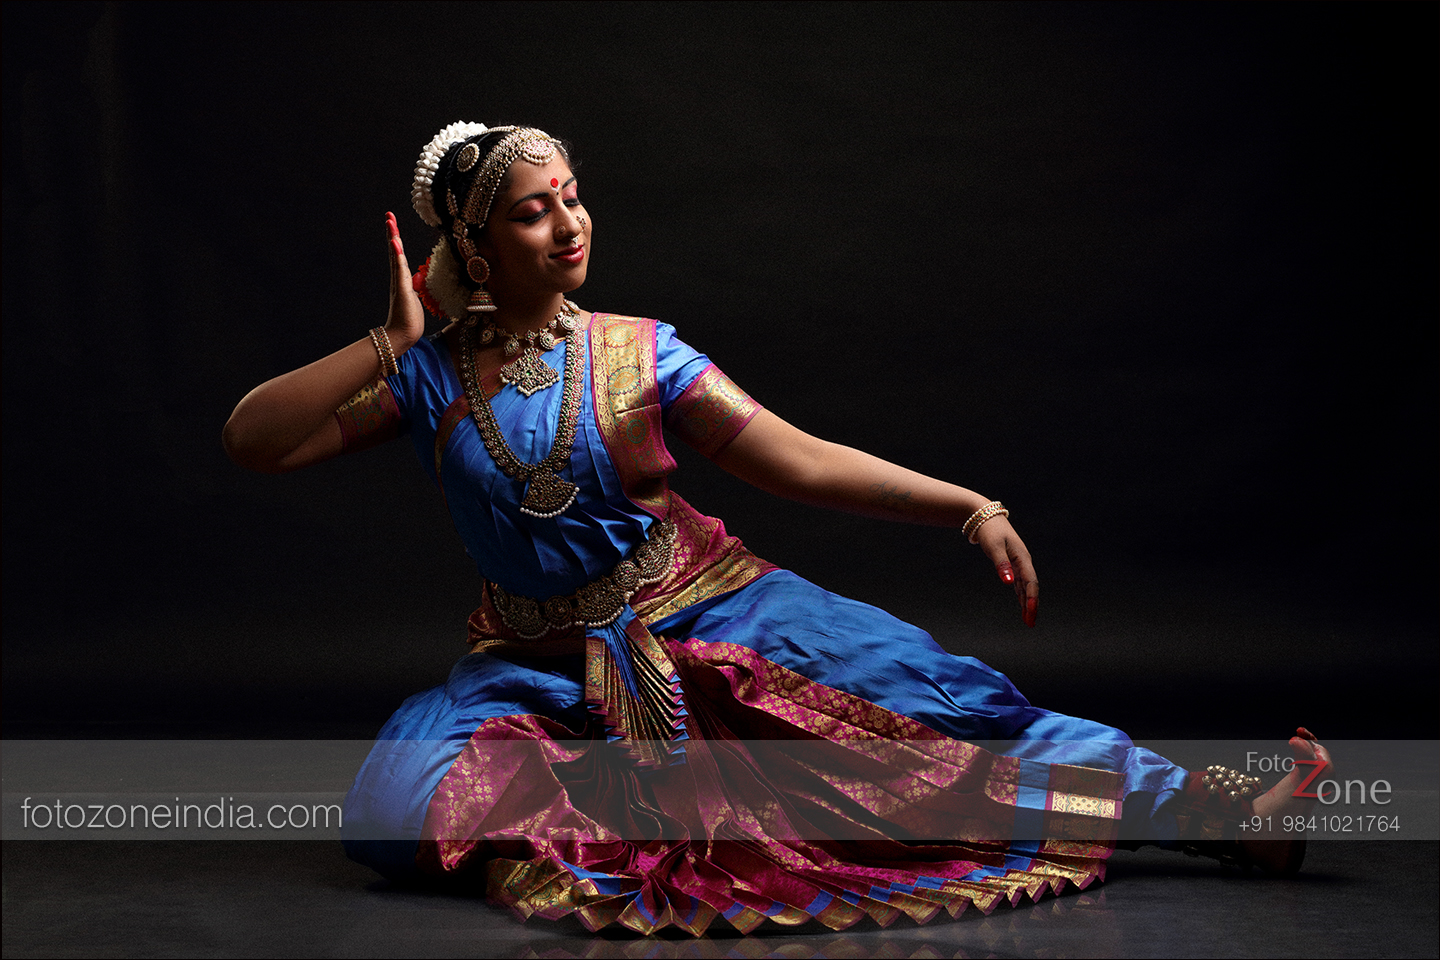 bharatanatyam pre arangetram photography - Google Search | Bharatanatyam  poses, Dance photography poses, Dance poses